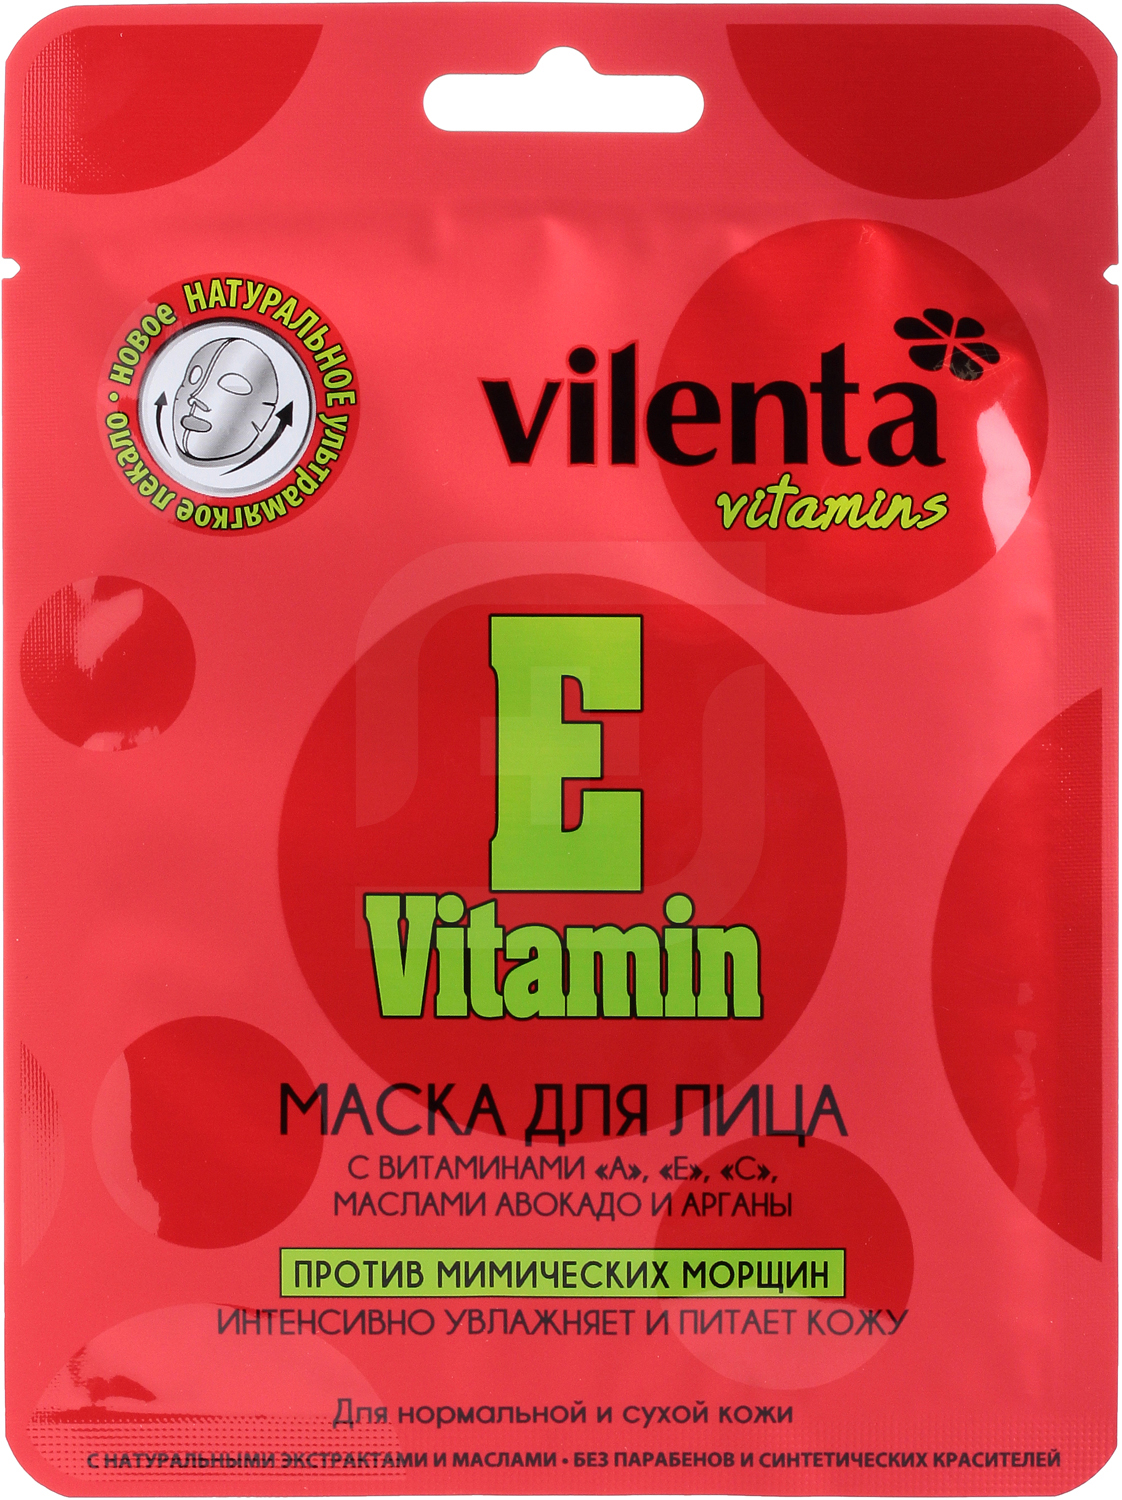 Маска для лица антиоксидантная с витаминами А,Е,С, 7 мл, Ангиофарм